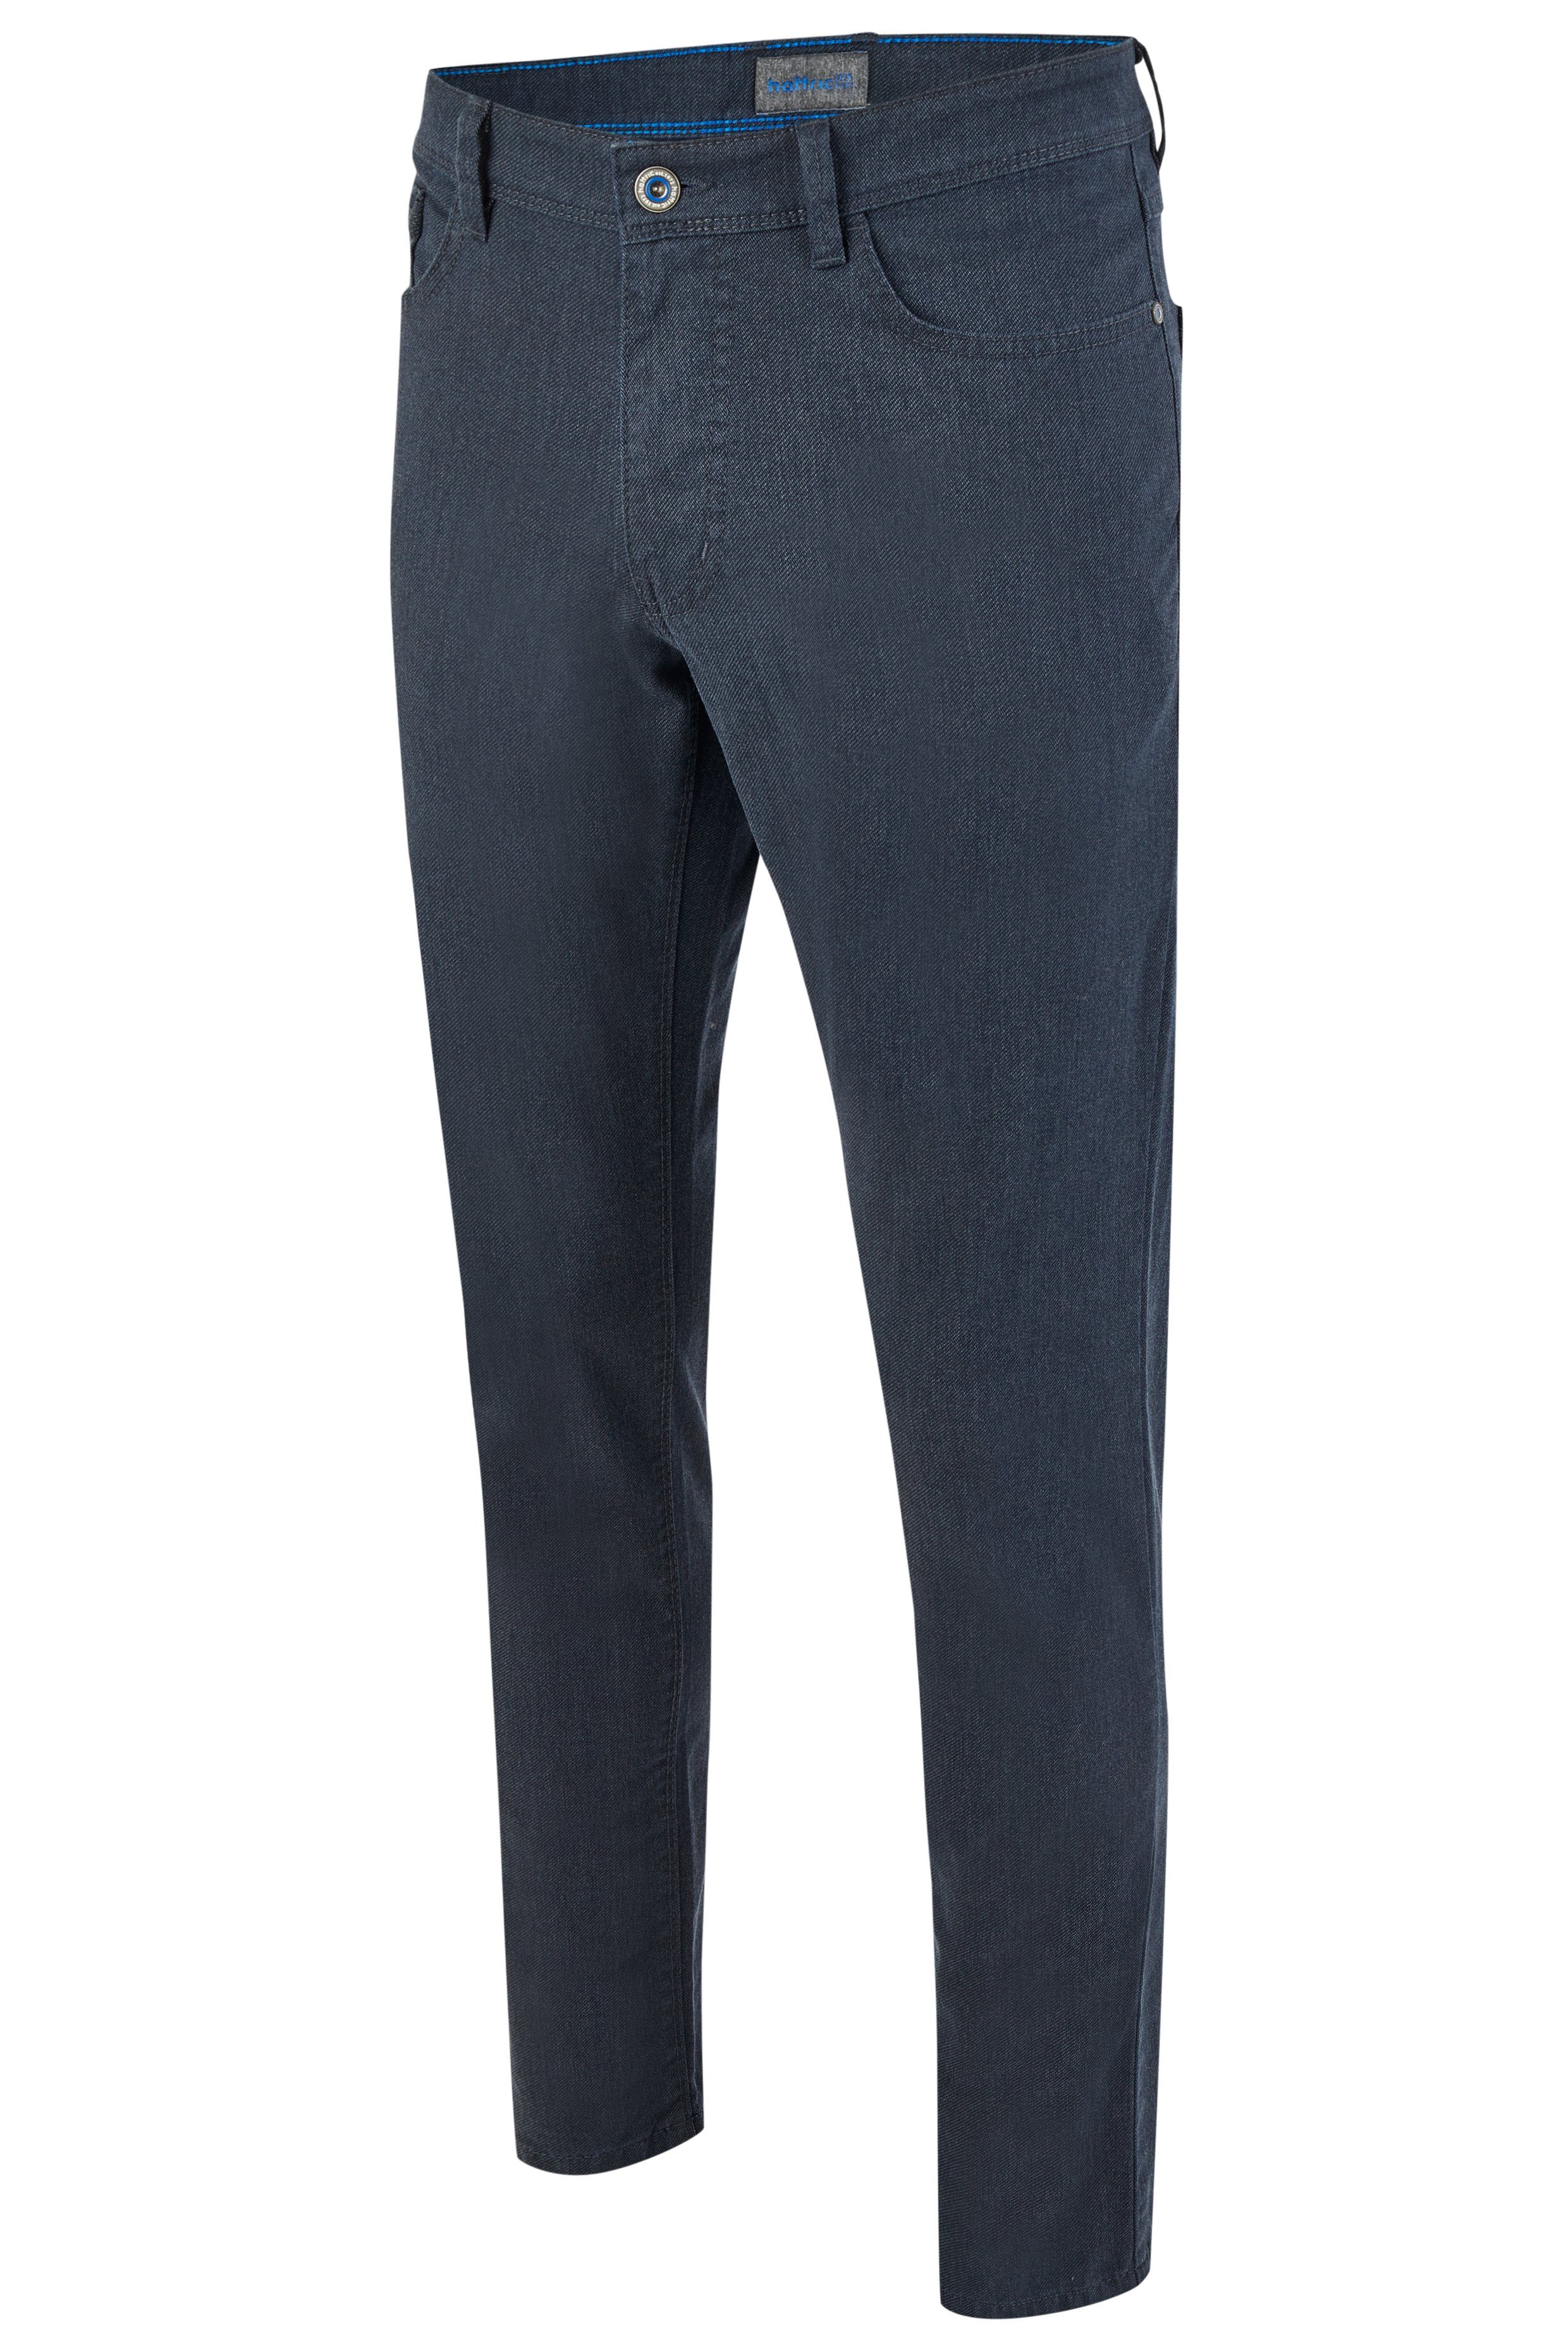 HATTRIC gabardine Hattric 5-Pocket-Jeans HUNTER LOOK WOOLEN 6255.42 - 688085 blue